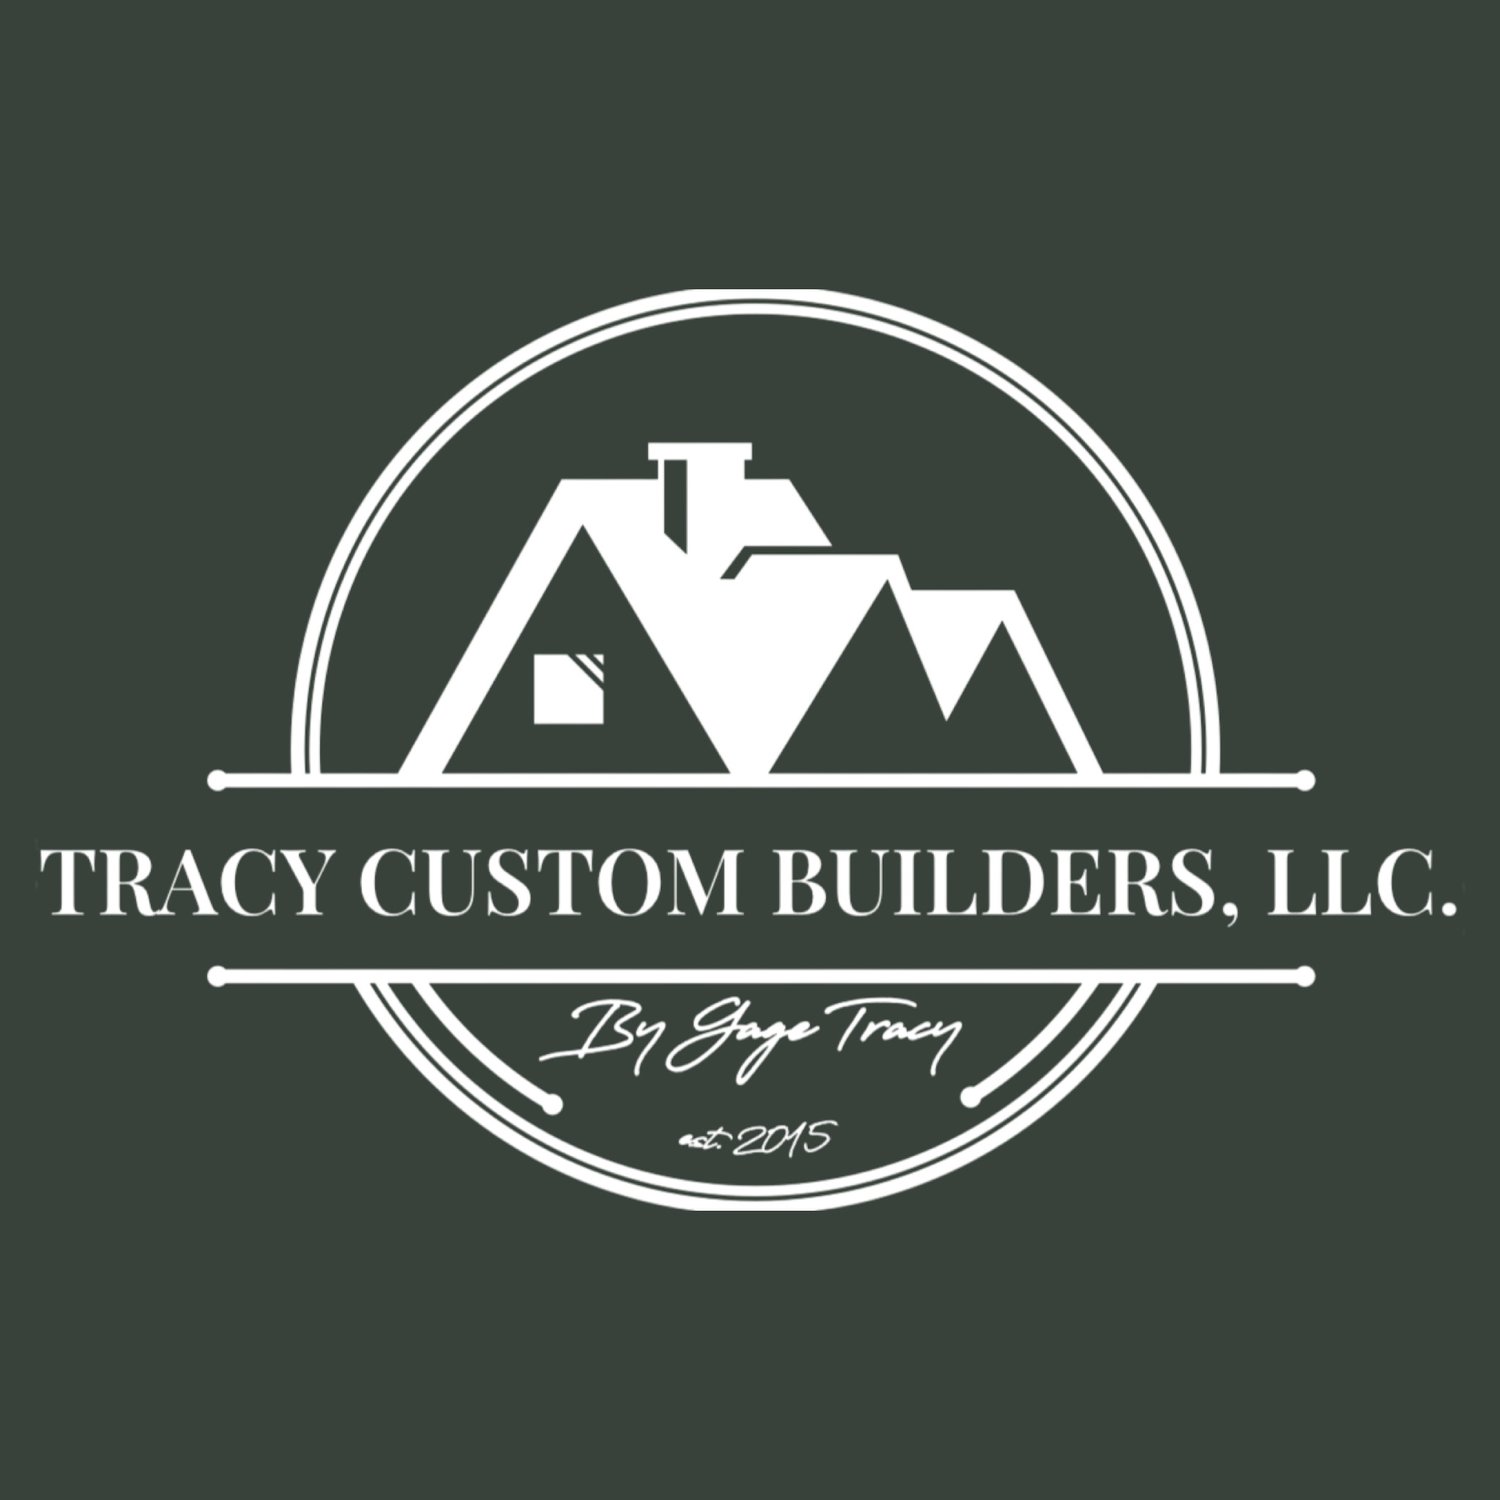 Tracy Custom Builders